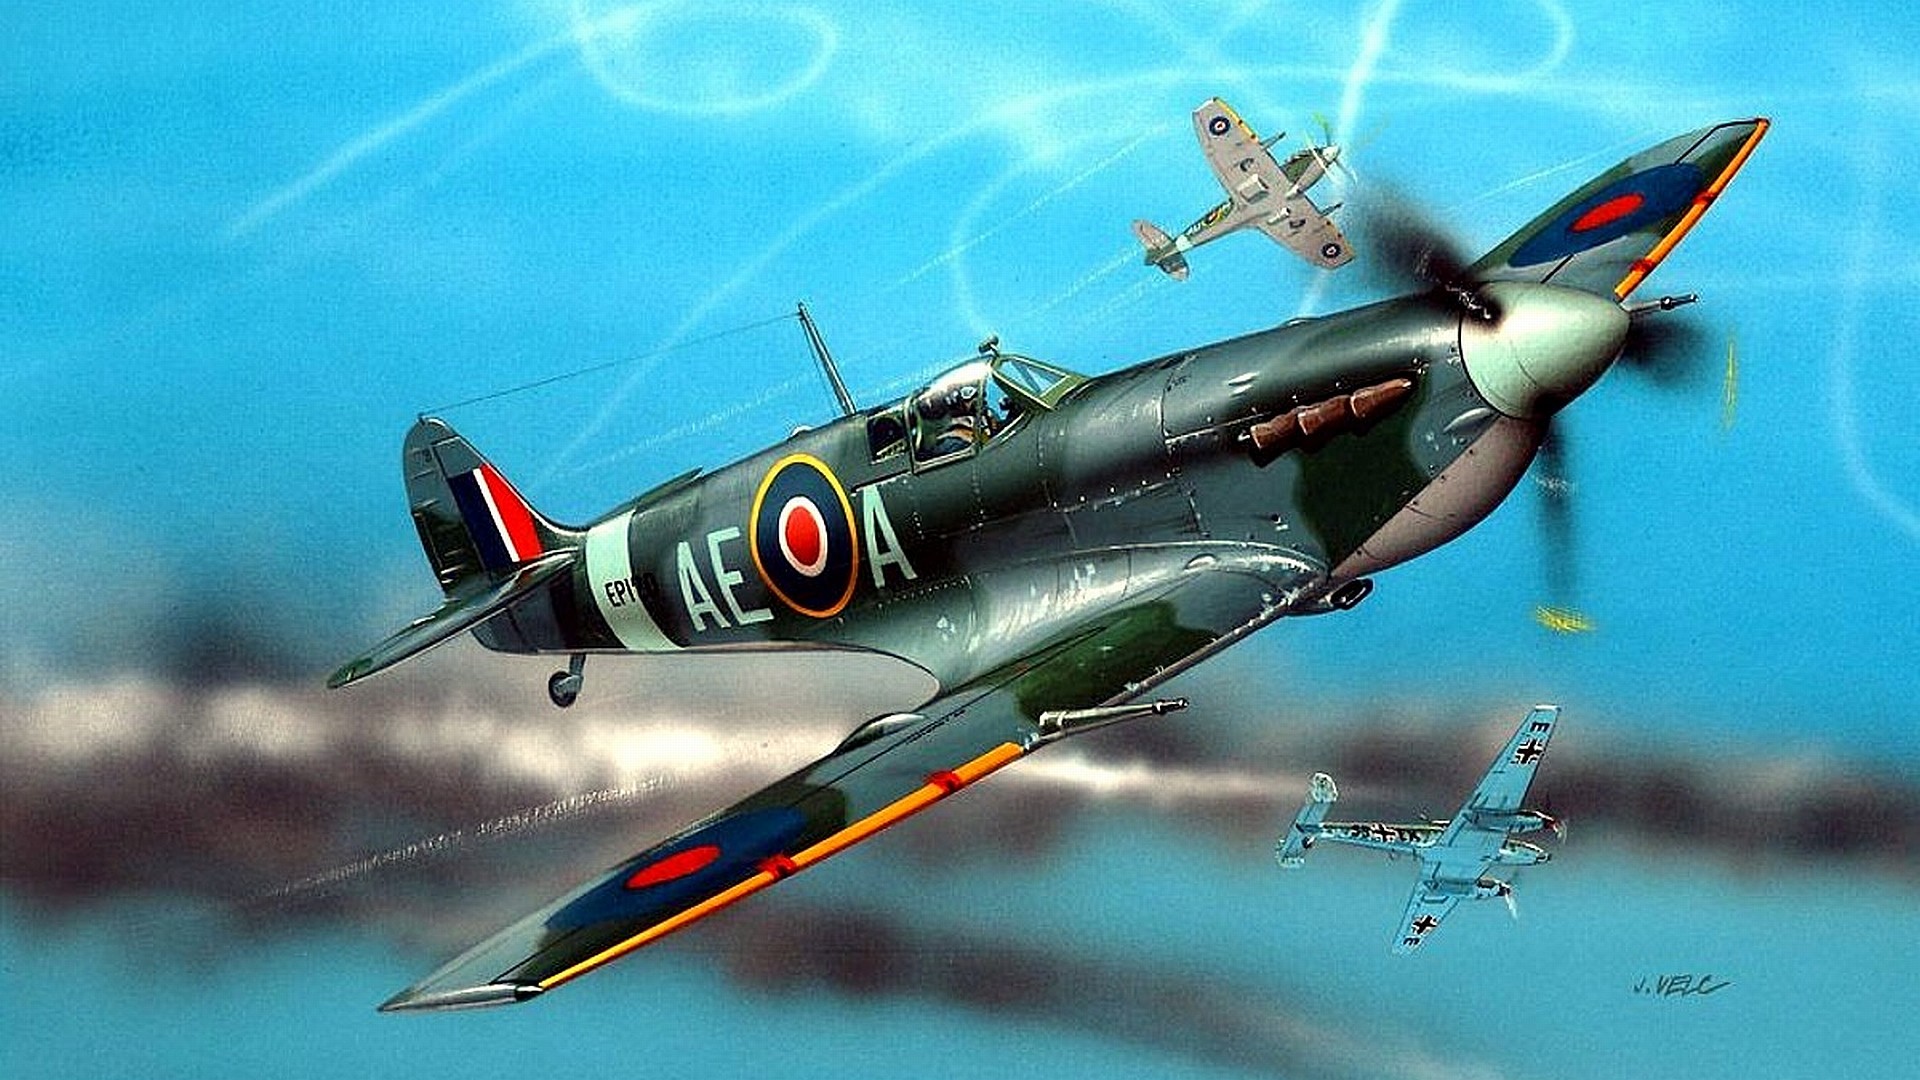 1920x1080 Military - Supermarine Spitfire Wallpaper